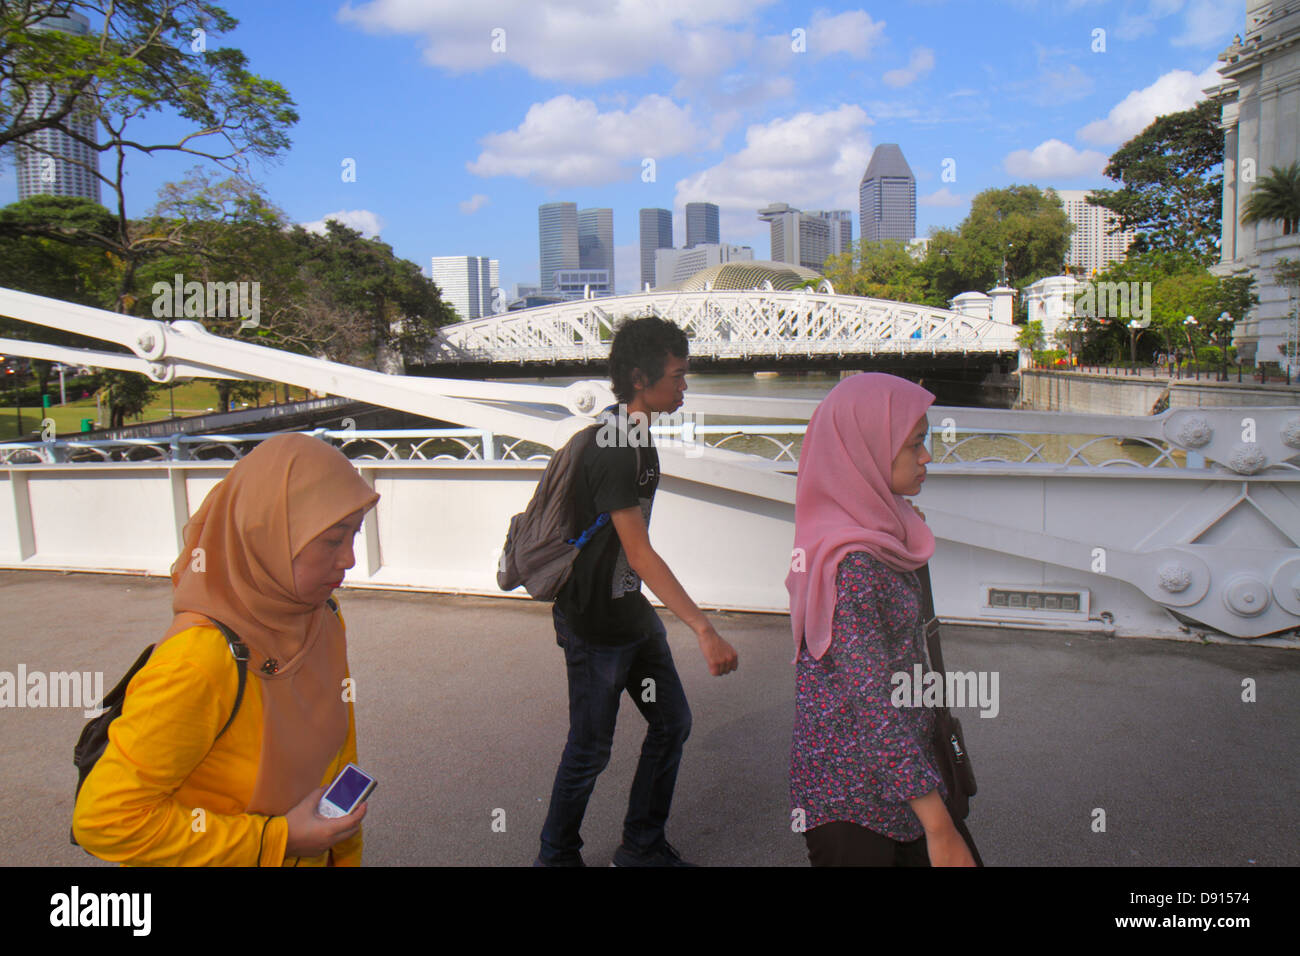 Singapore Singapore River,Boat Quay,Cavenagh Bridge,Asian man men male,woman female women,Muslim,hijab,Sing130201162 Stock Photo